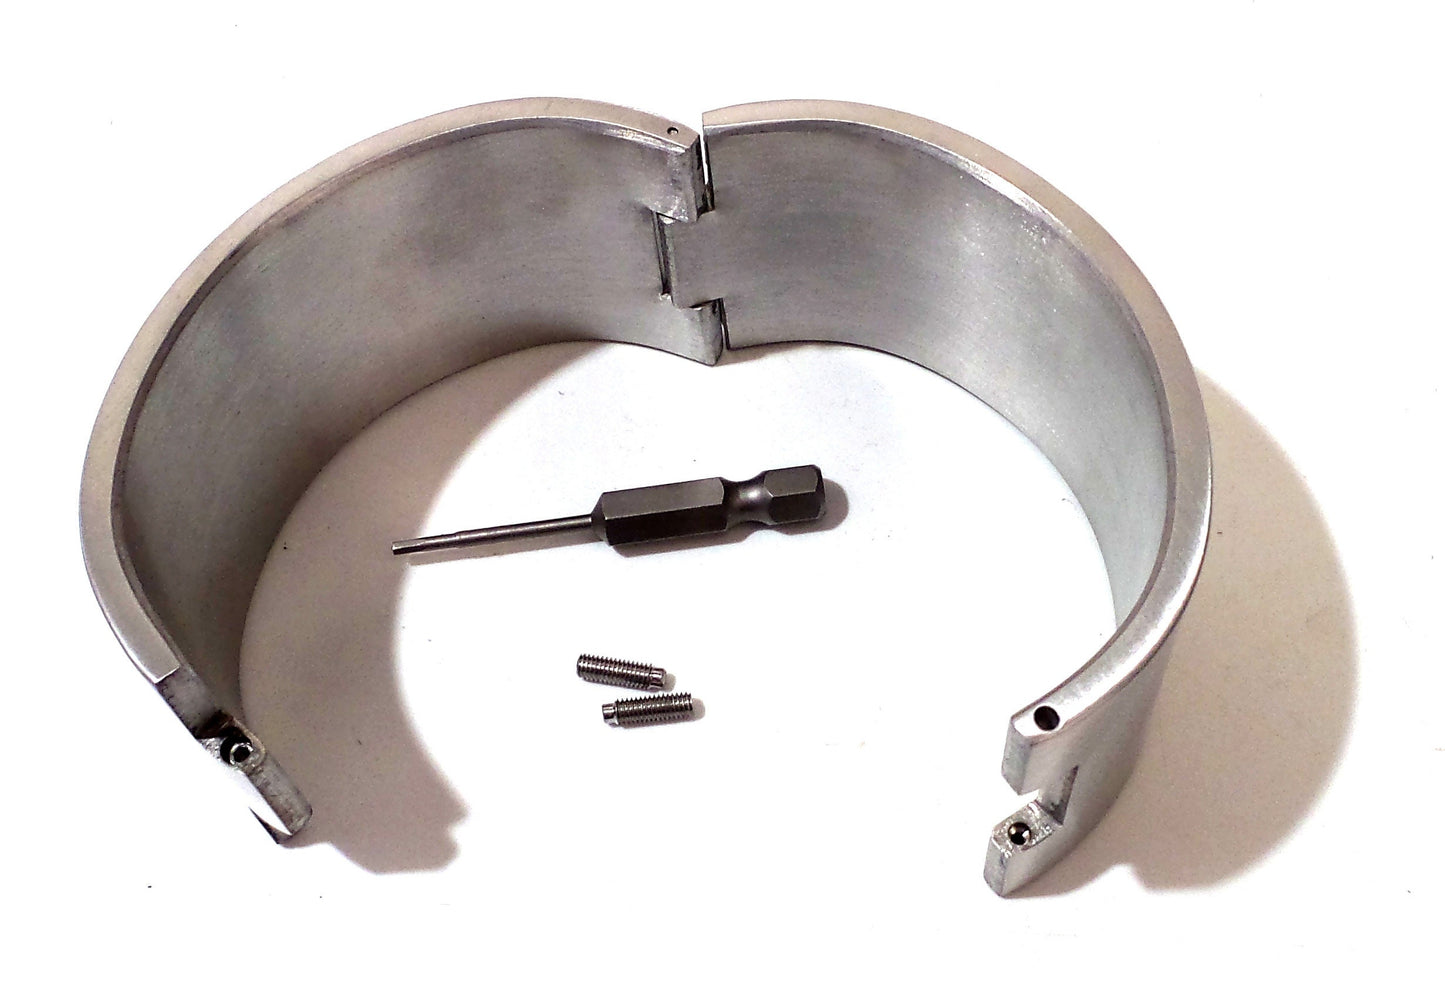 Final Sale - Locking Polished Stainless Steel Heavy Cuff Slave Bracelet